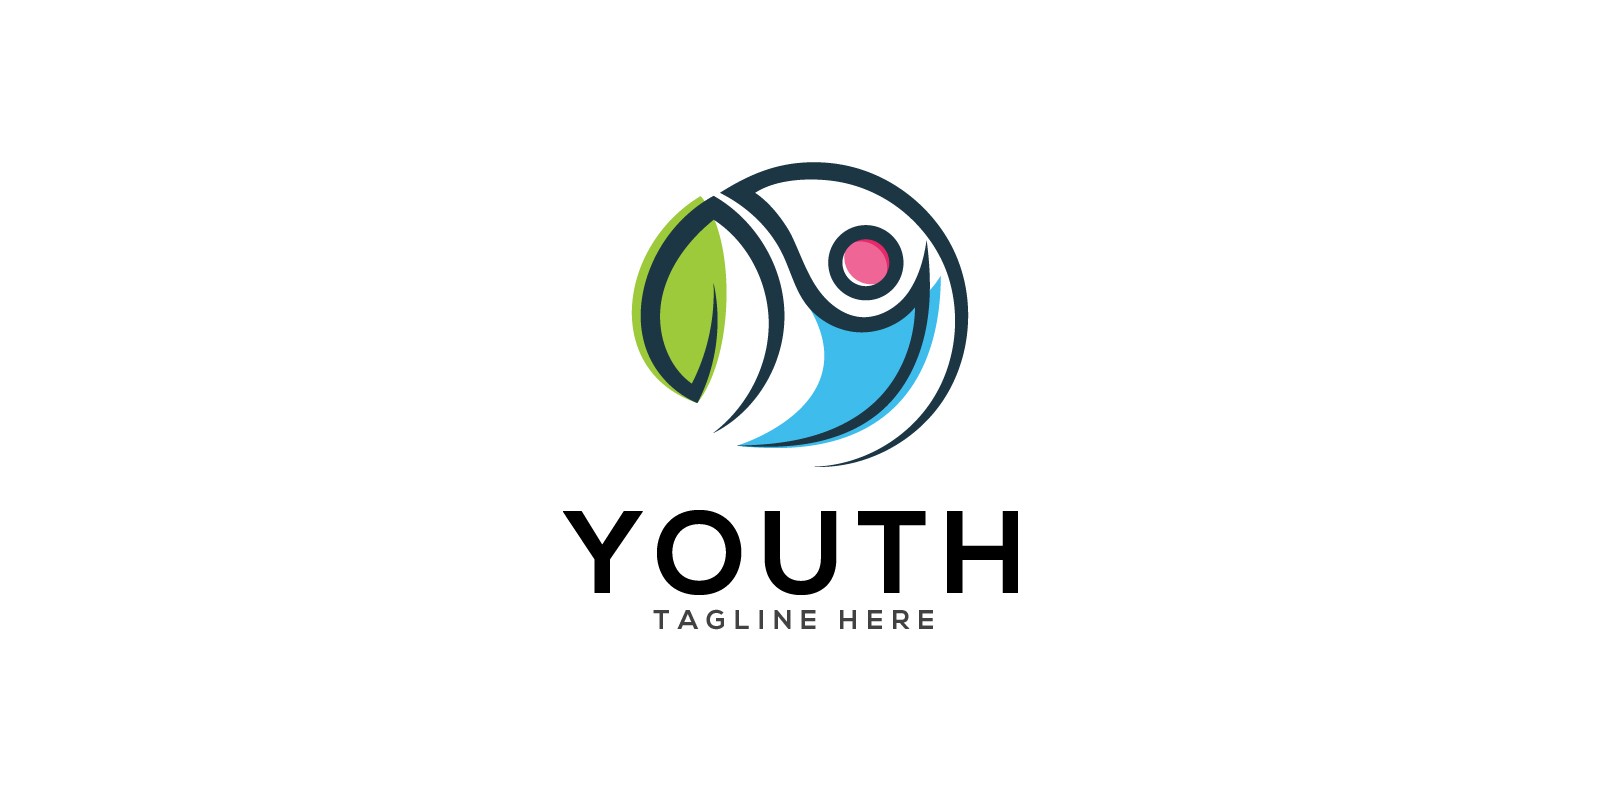 Youth Logo Design Ideas